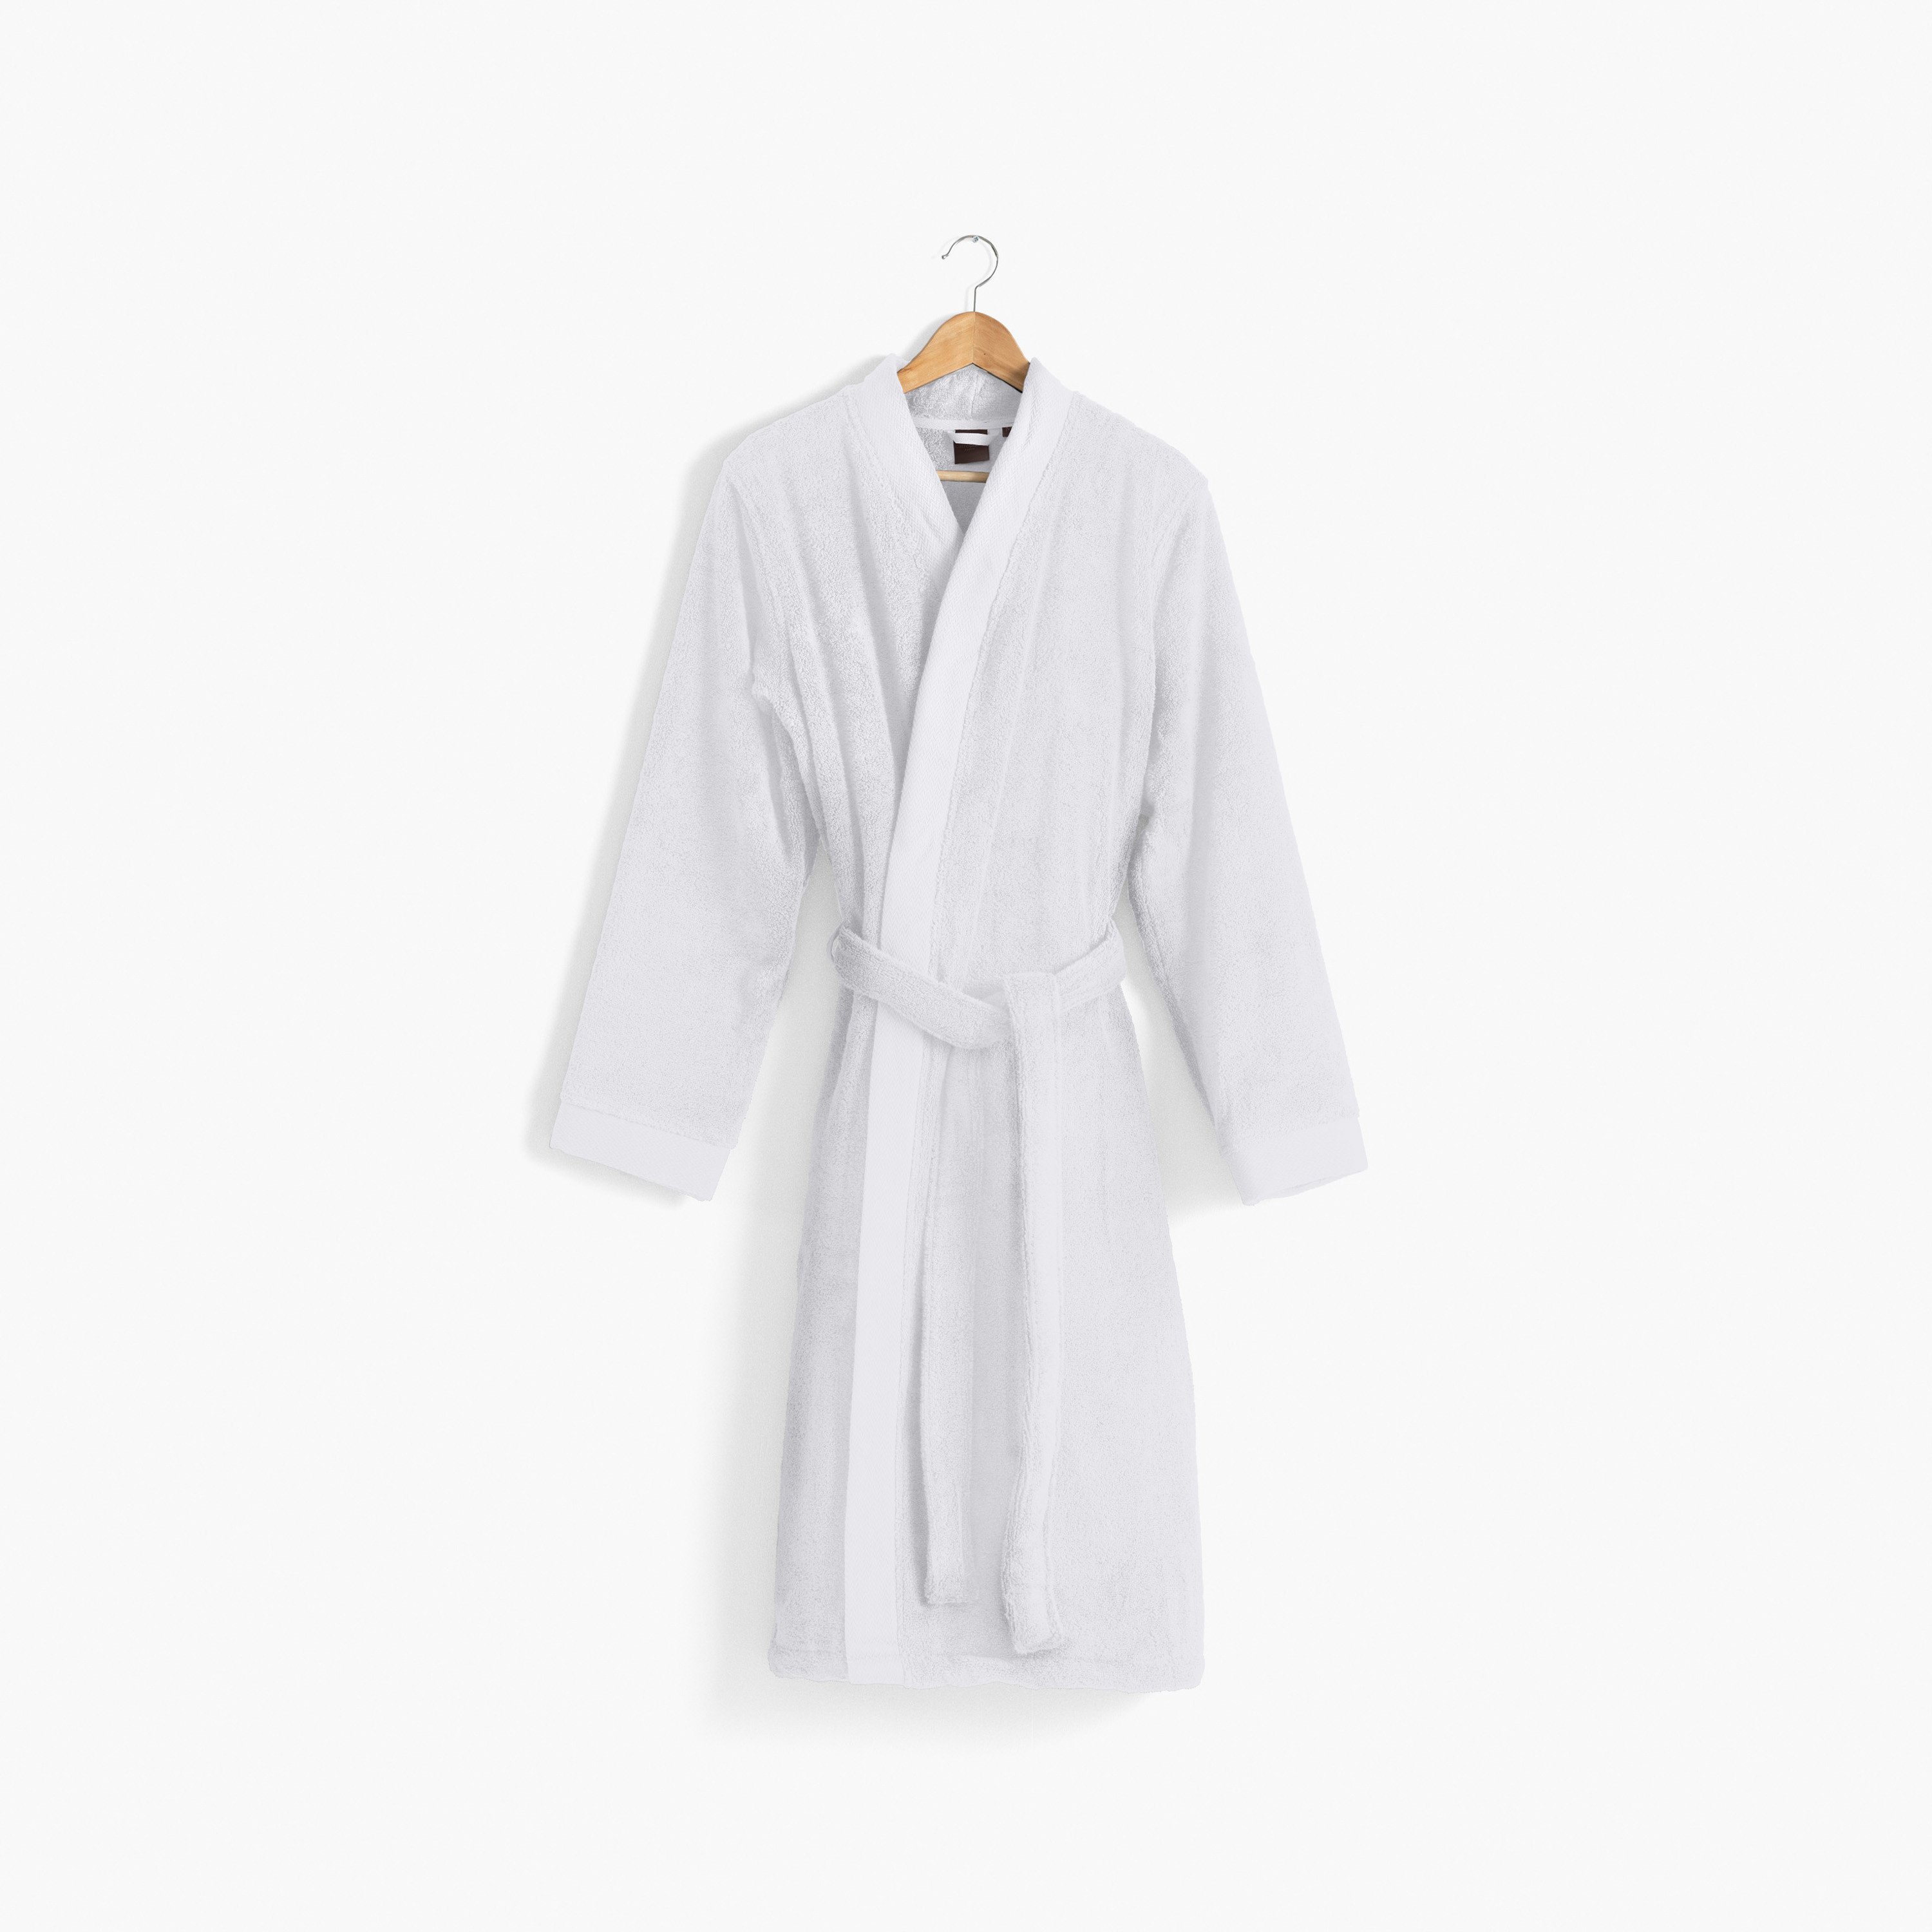 Men's bathrobe in soft cotton Romeo white